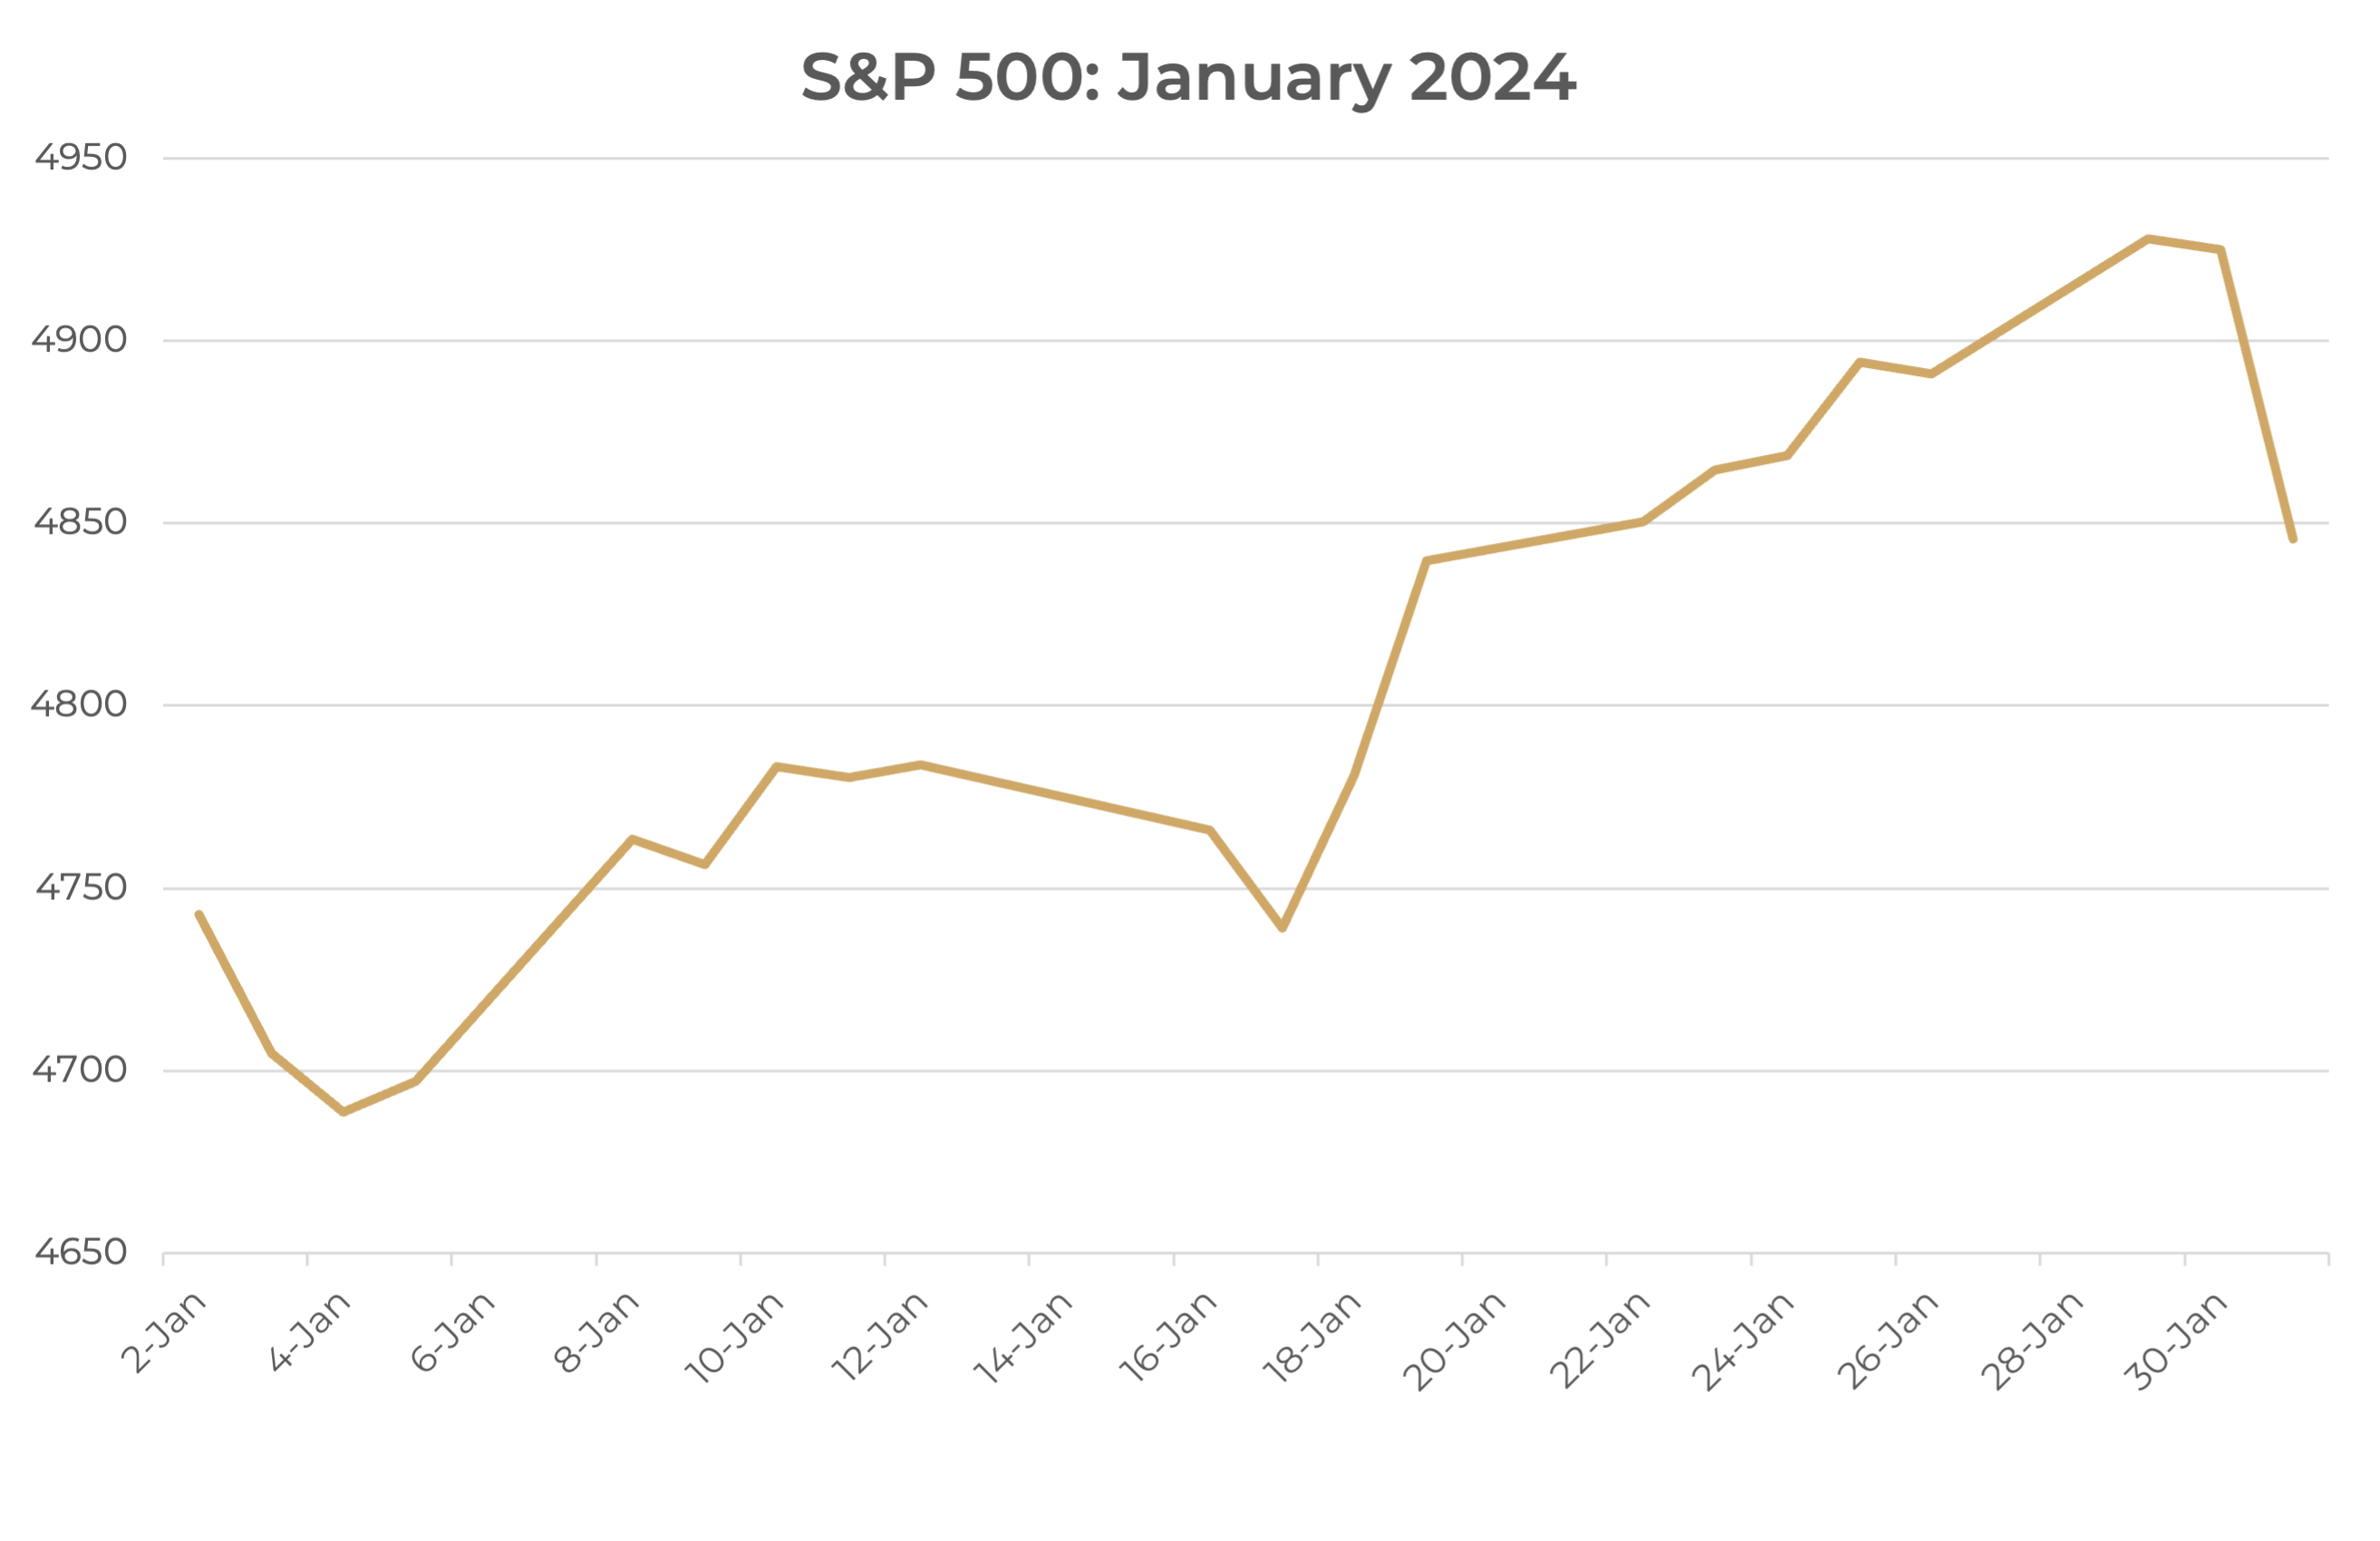 S&P 500 January 2024